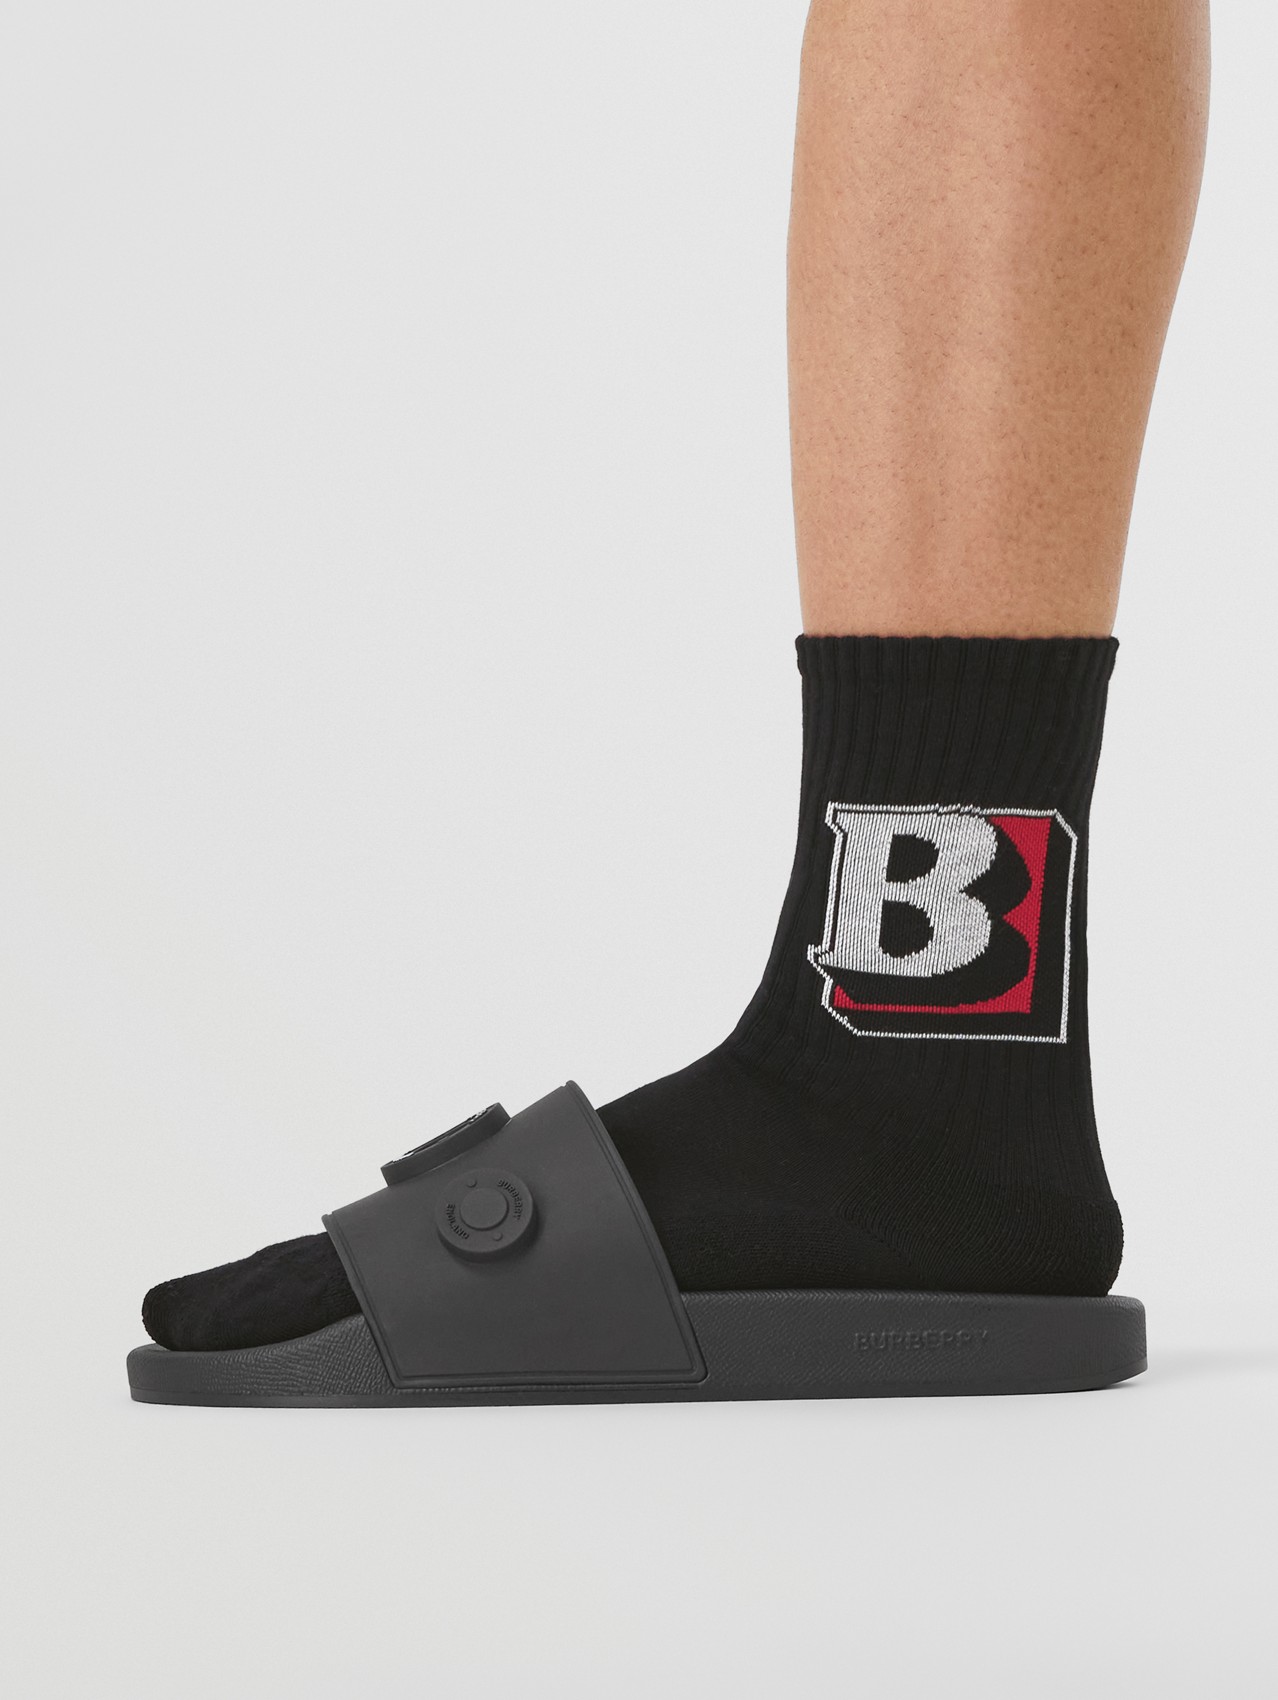 Men's Sandals | Burberry® Official